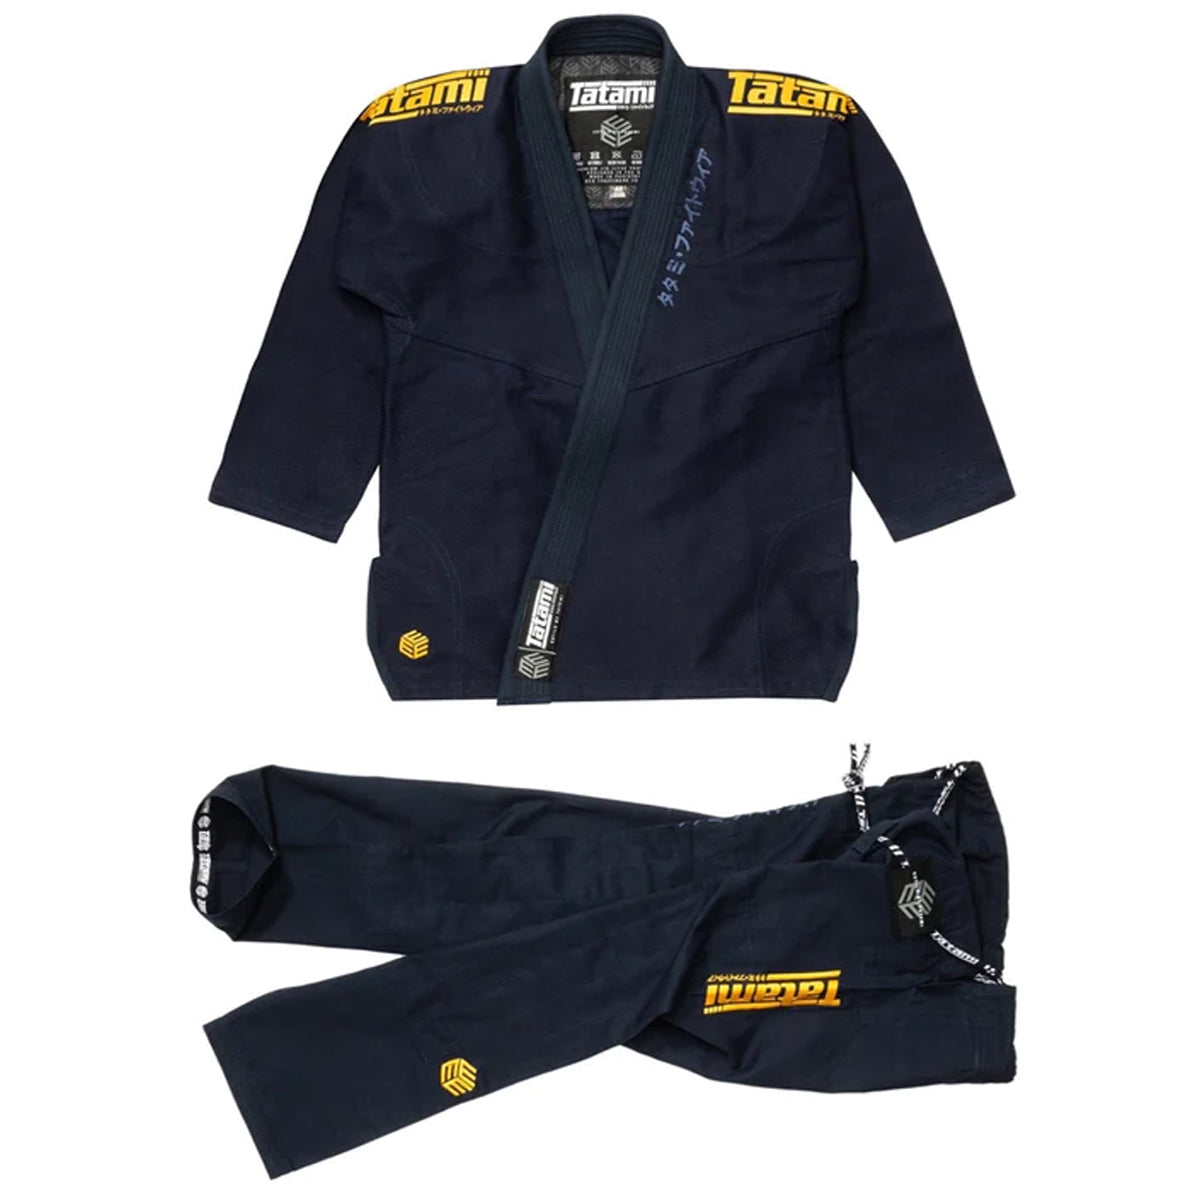 Tatami Fightwear Estilo Black Label BJJ Gi - Gold/Navy Tatami Fightwear